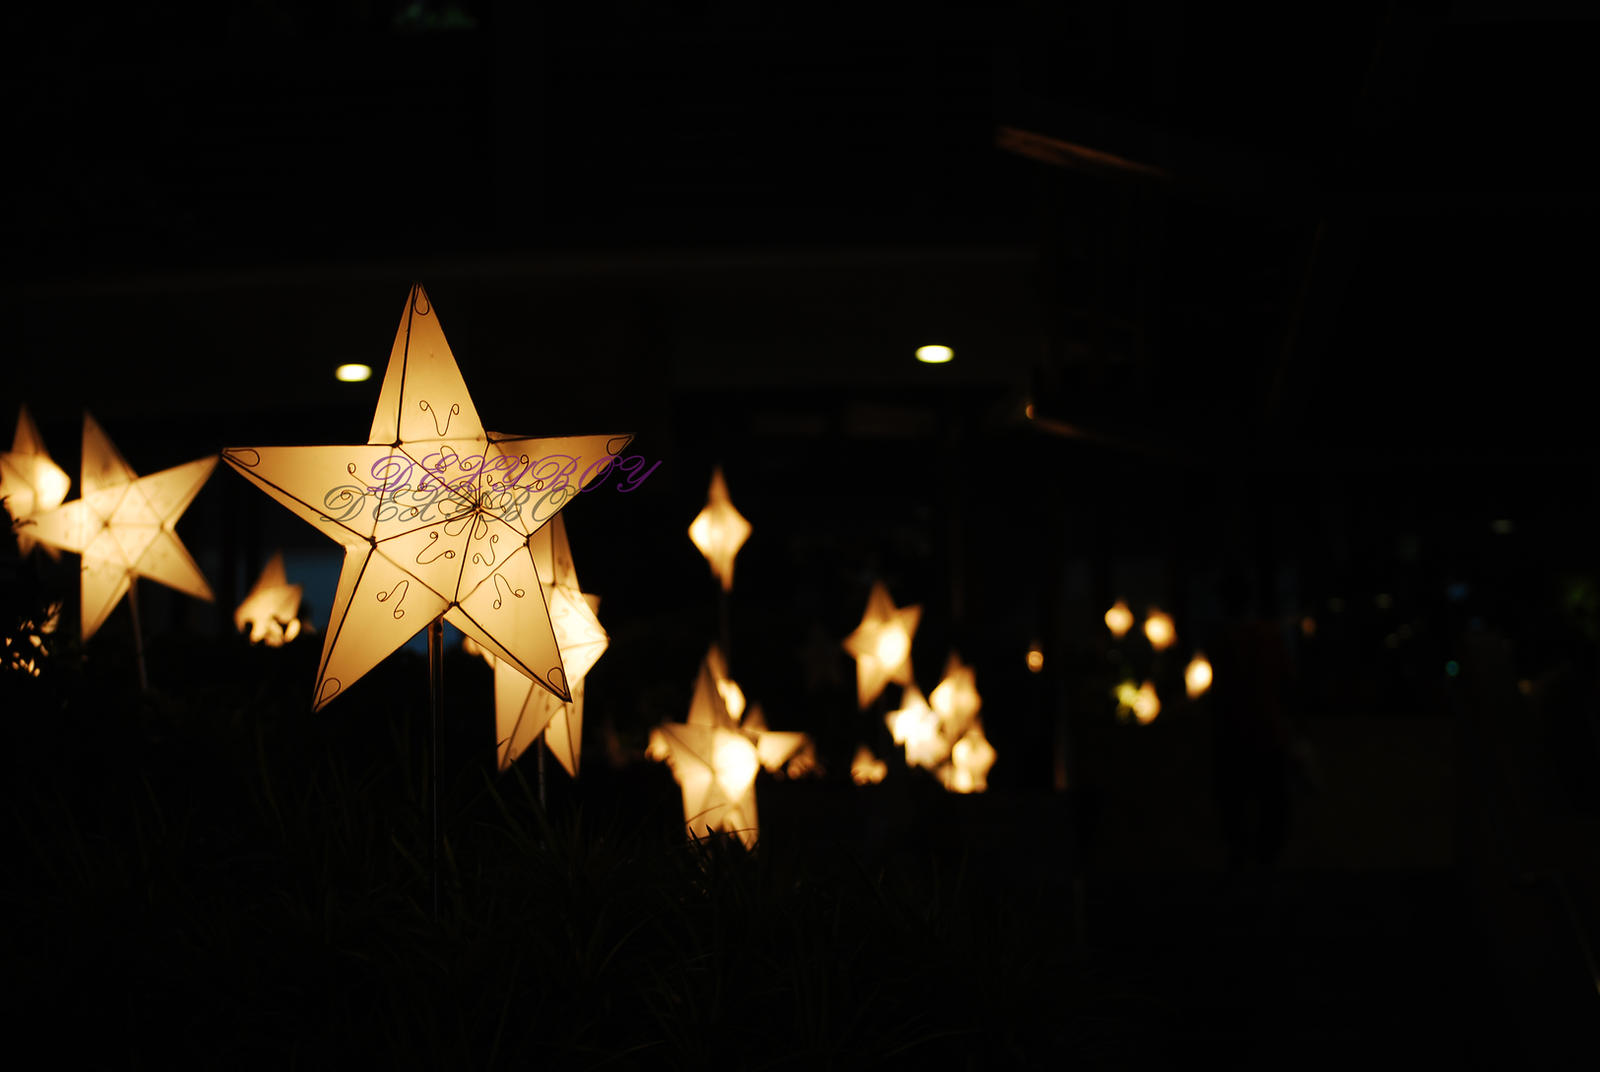 Звезды звезды звезды без края. Звезда зажглась. Зажигаем звезды. Звезда картинка. Звезда светится.